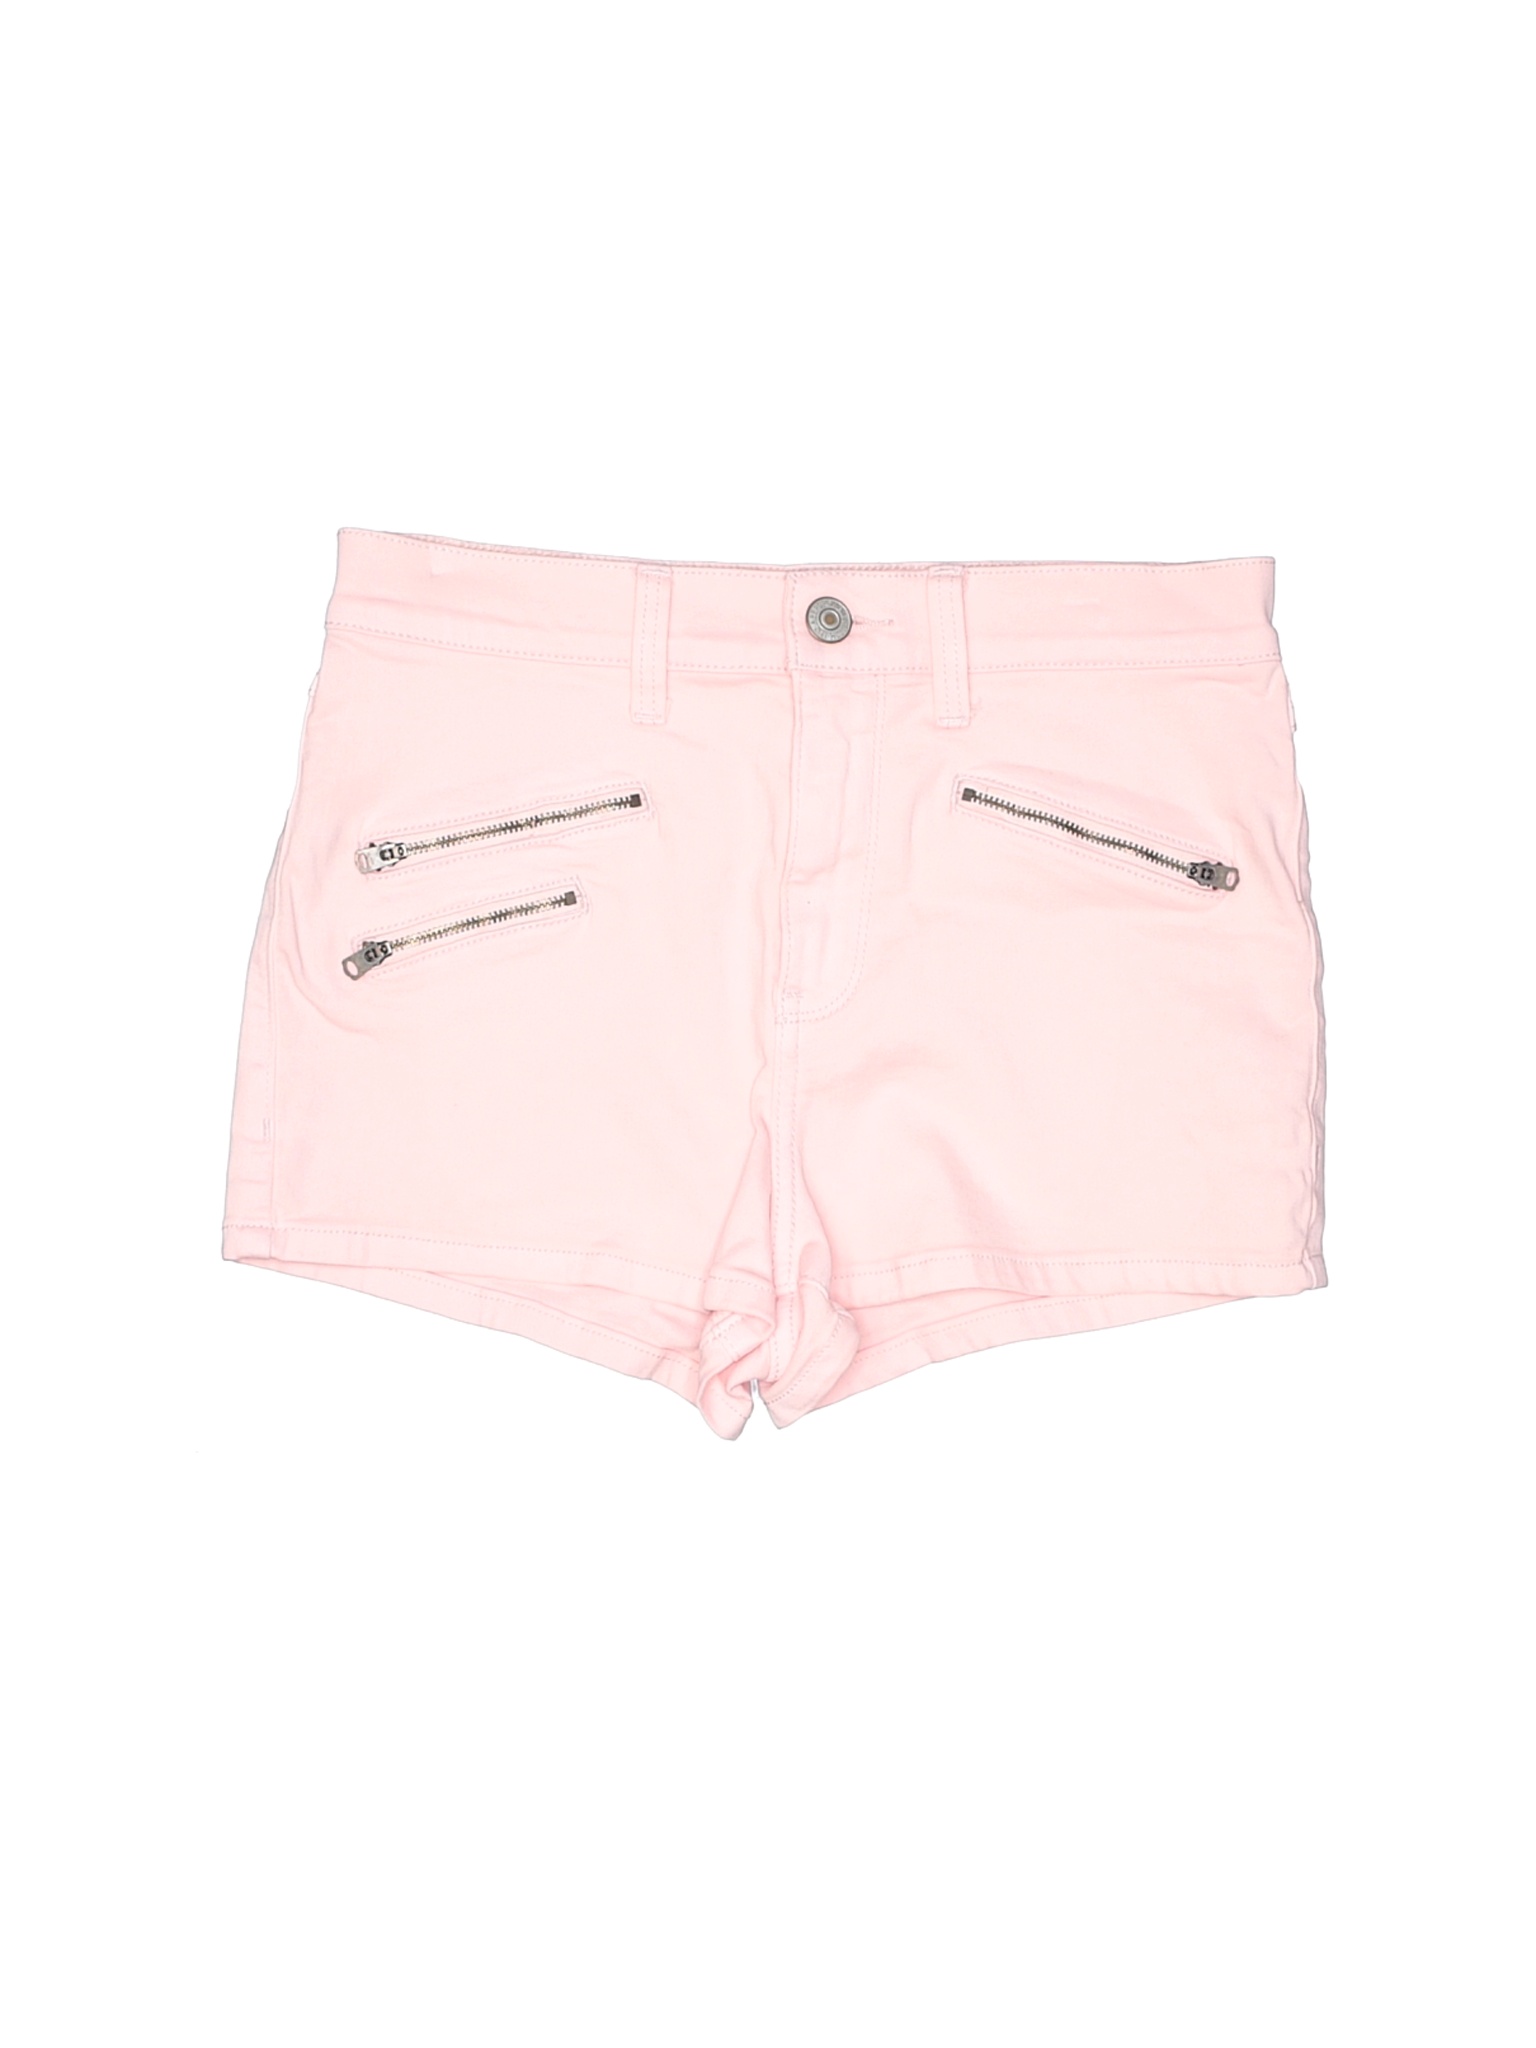 Abercrombie & Fitch Women Pink Denim Shorts 28W | eBay